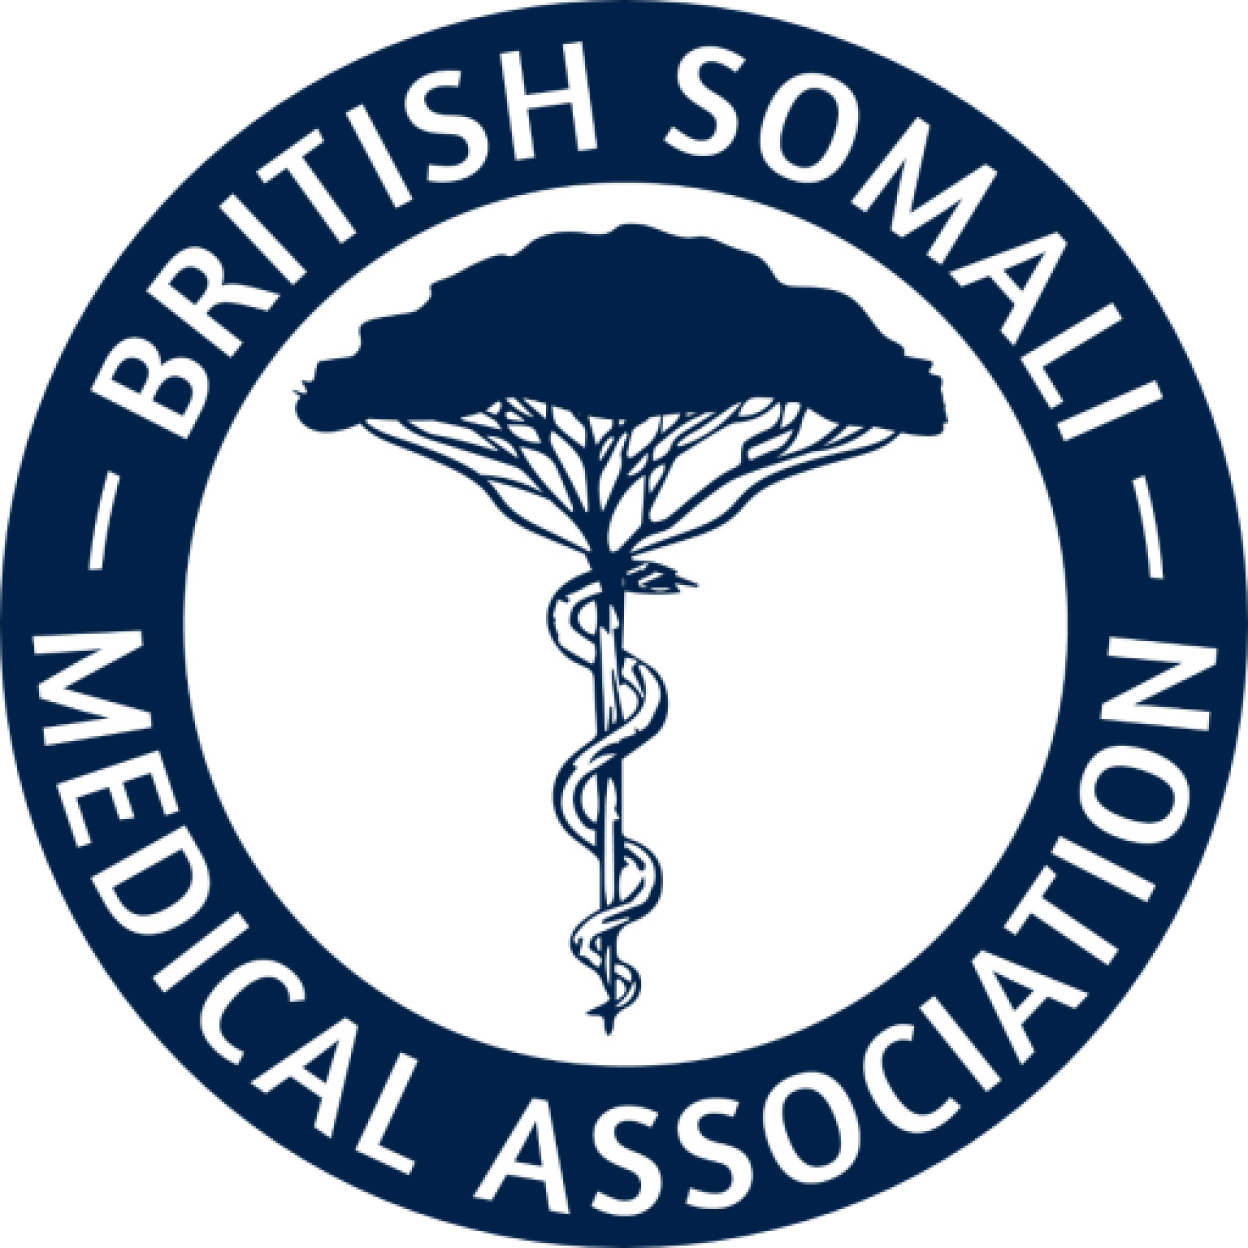 The British Somali Medical Association